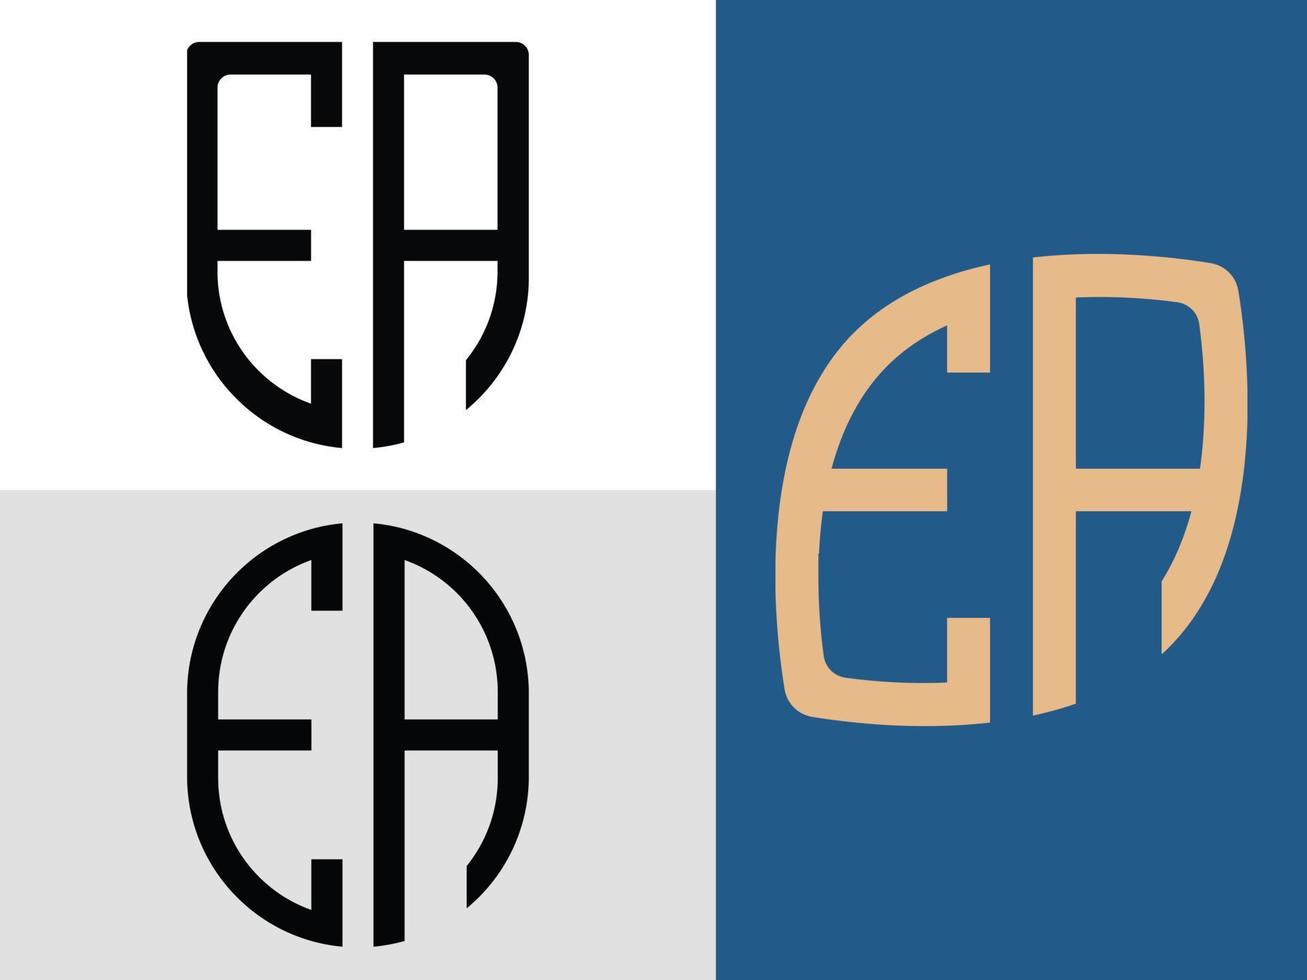 kreative anfangsbuchstaben ea-logo-designs paket. vektor